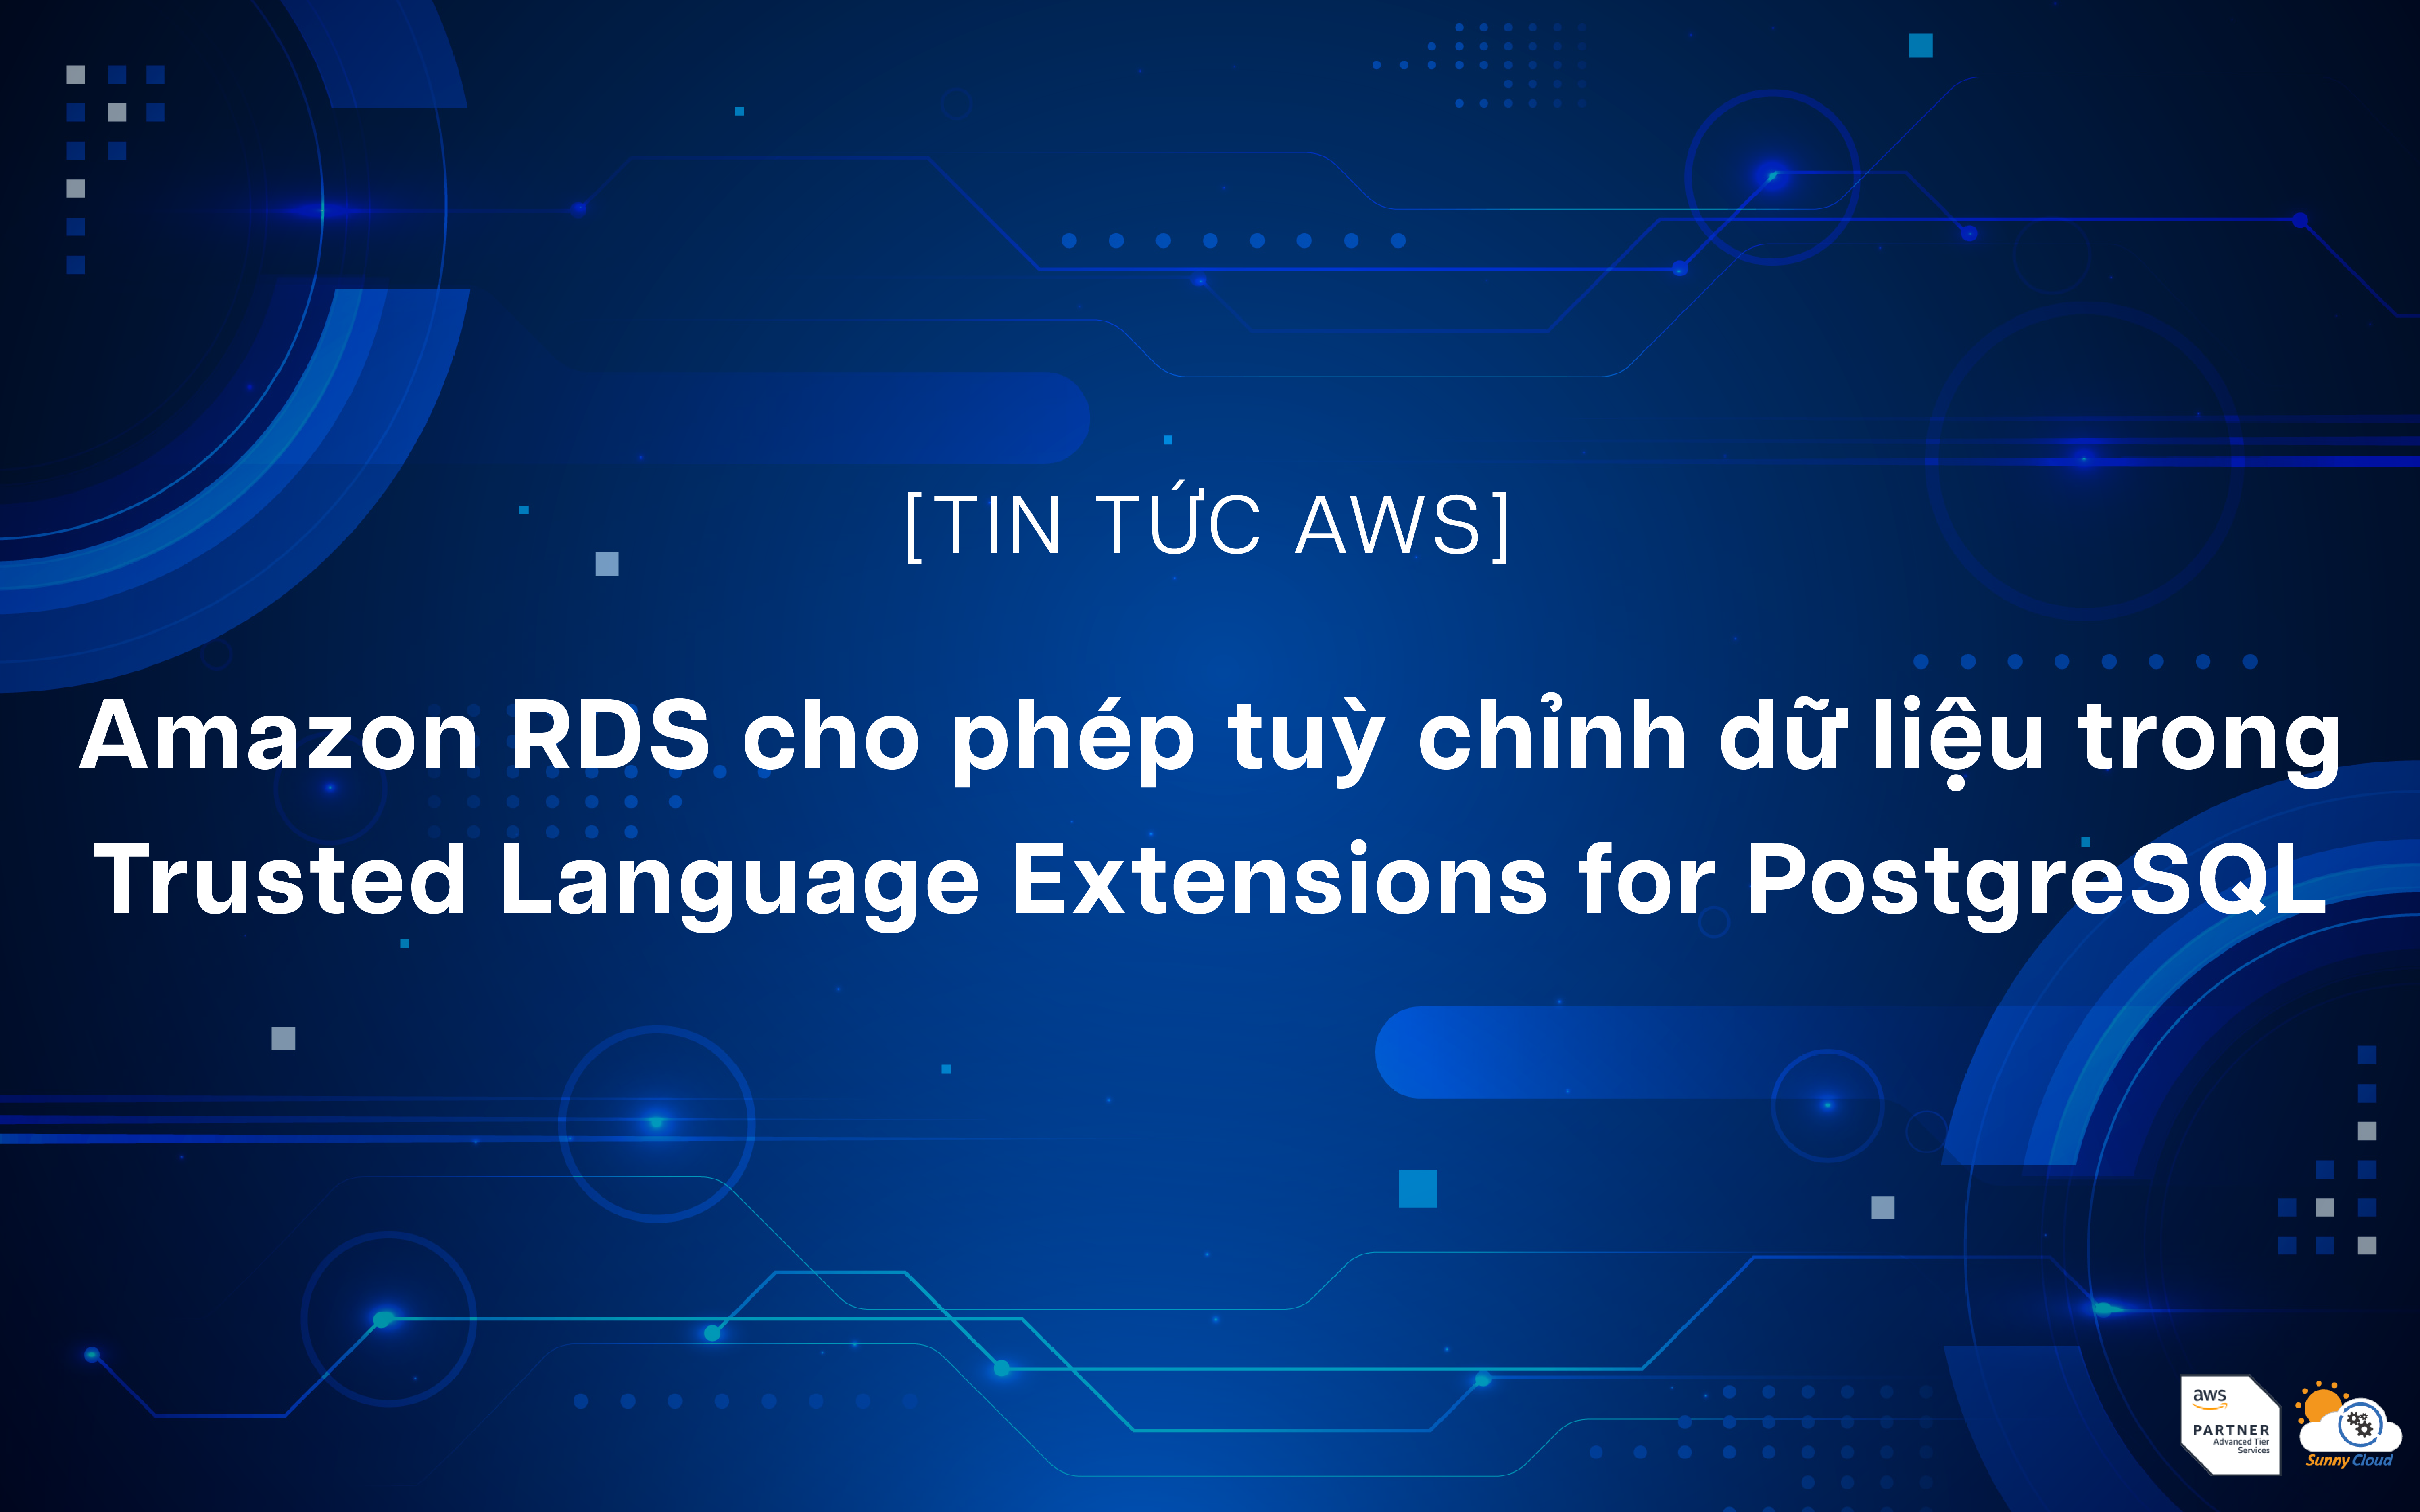 Amazon RDS cho phép tuỳ chỉnh dữ liệu trong Trusted Language Extensions for PostgreSQL